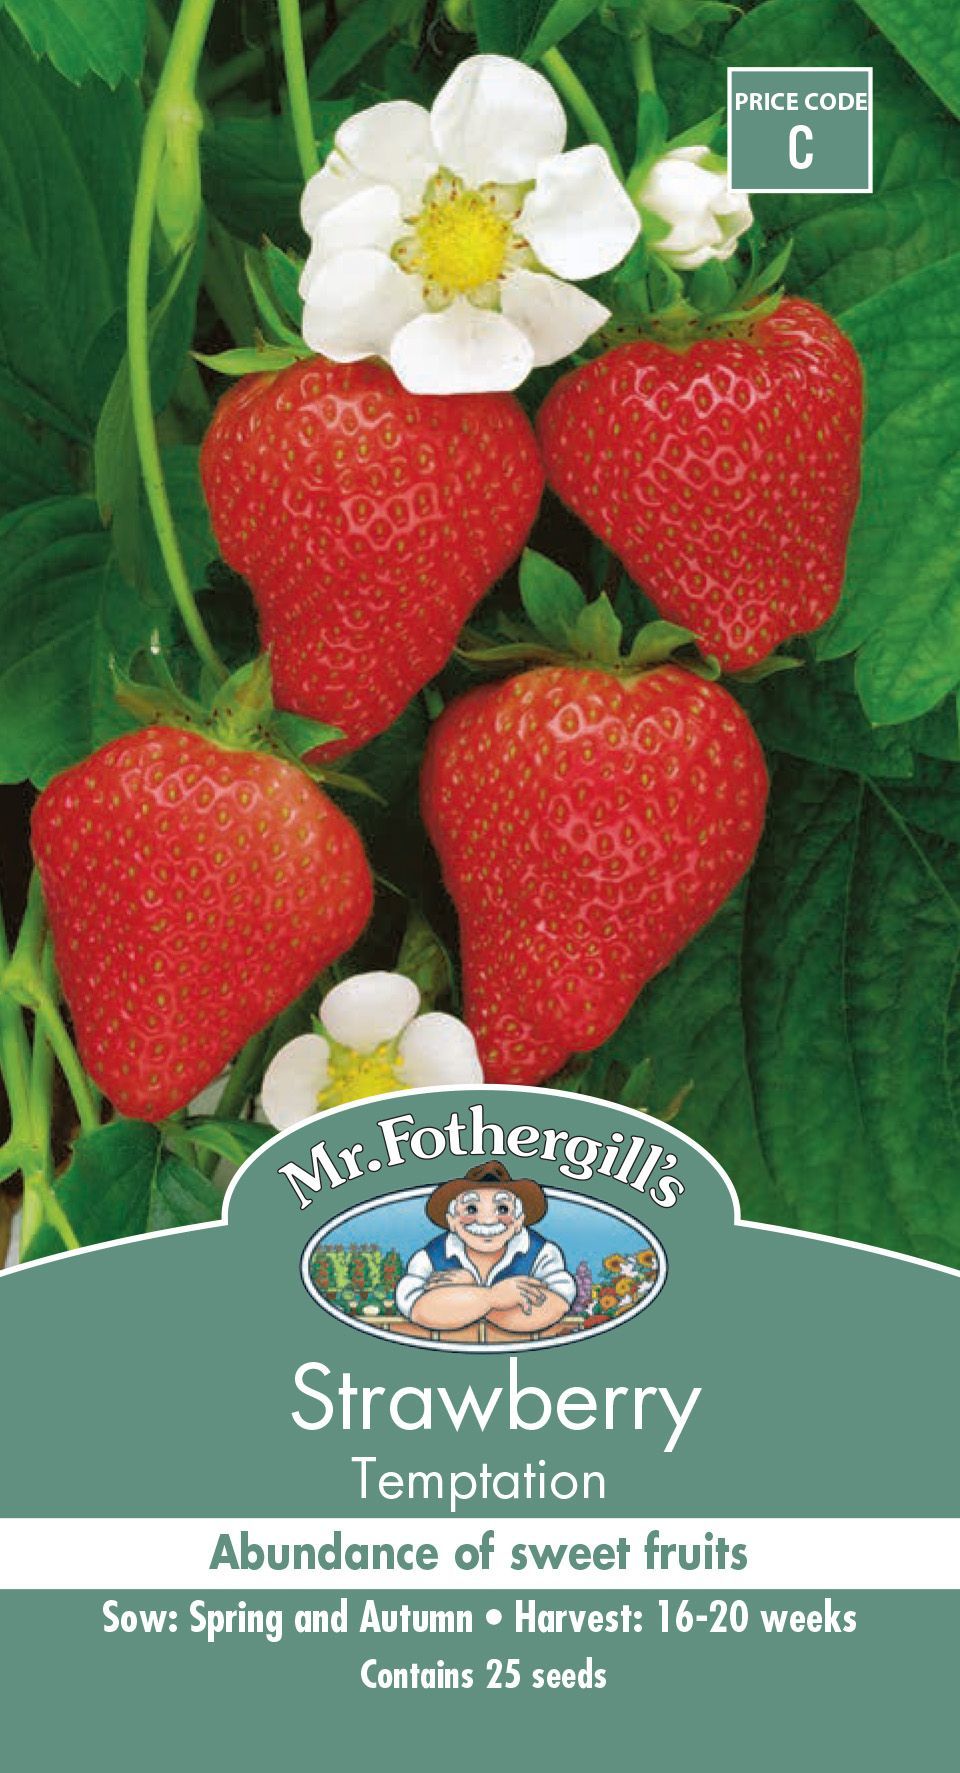 Mr Fothergills Strawberry Temptation - Woonona Petfood & Produce